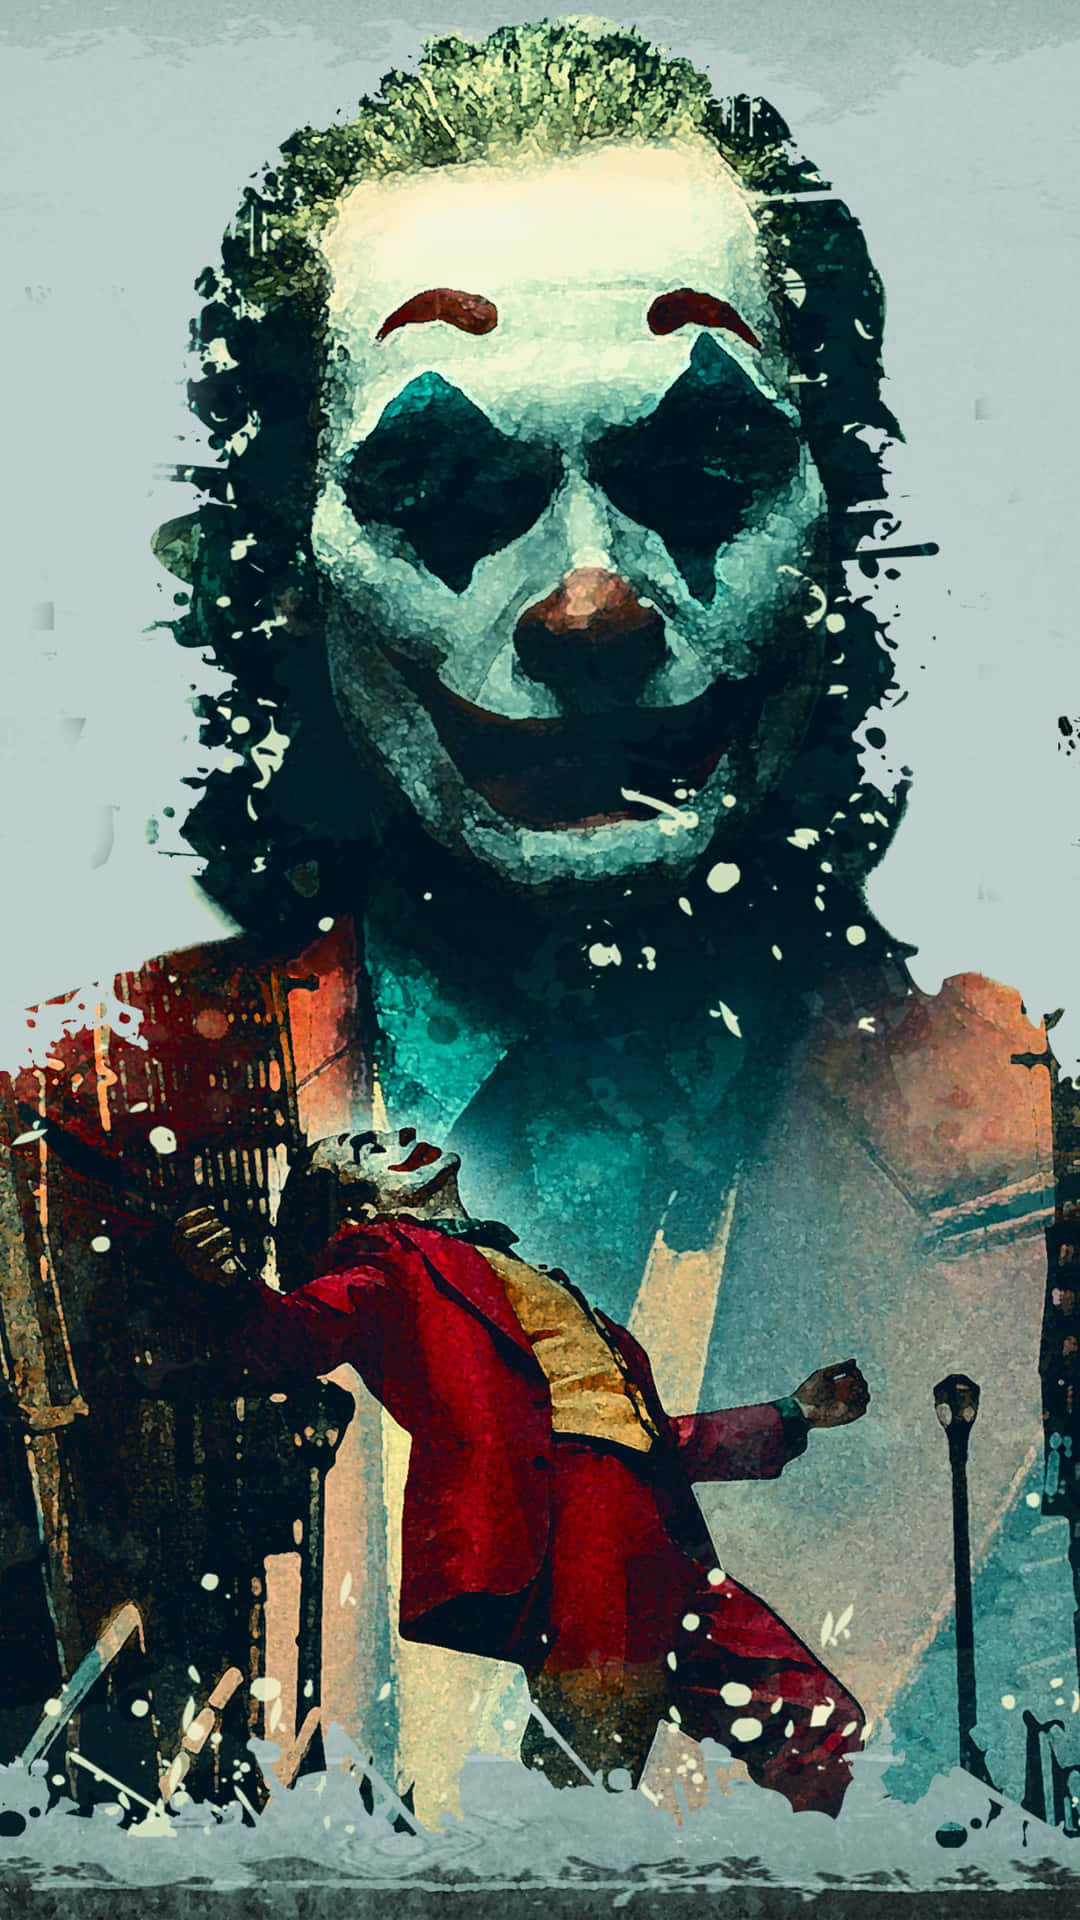 Dark and Eerie Joker Painting Wallpaper